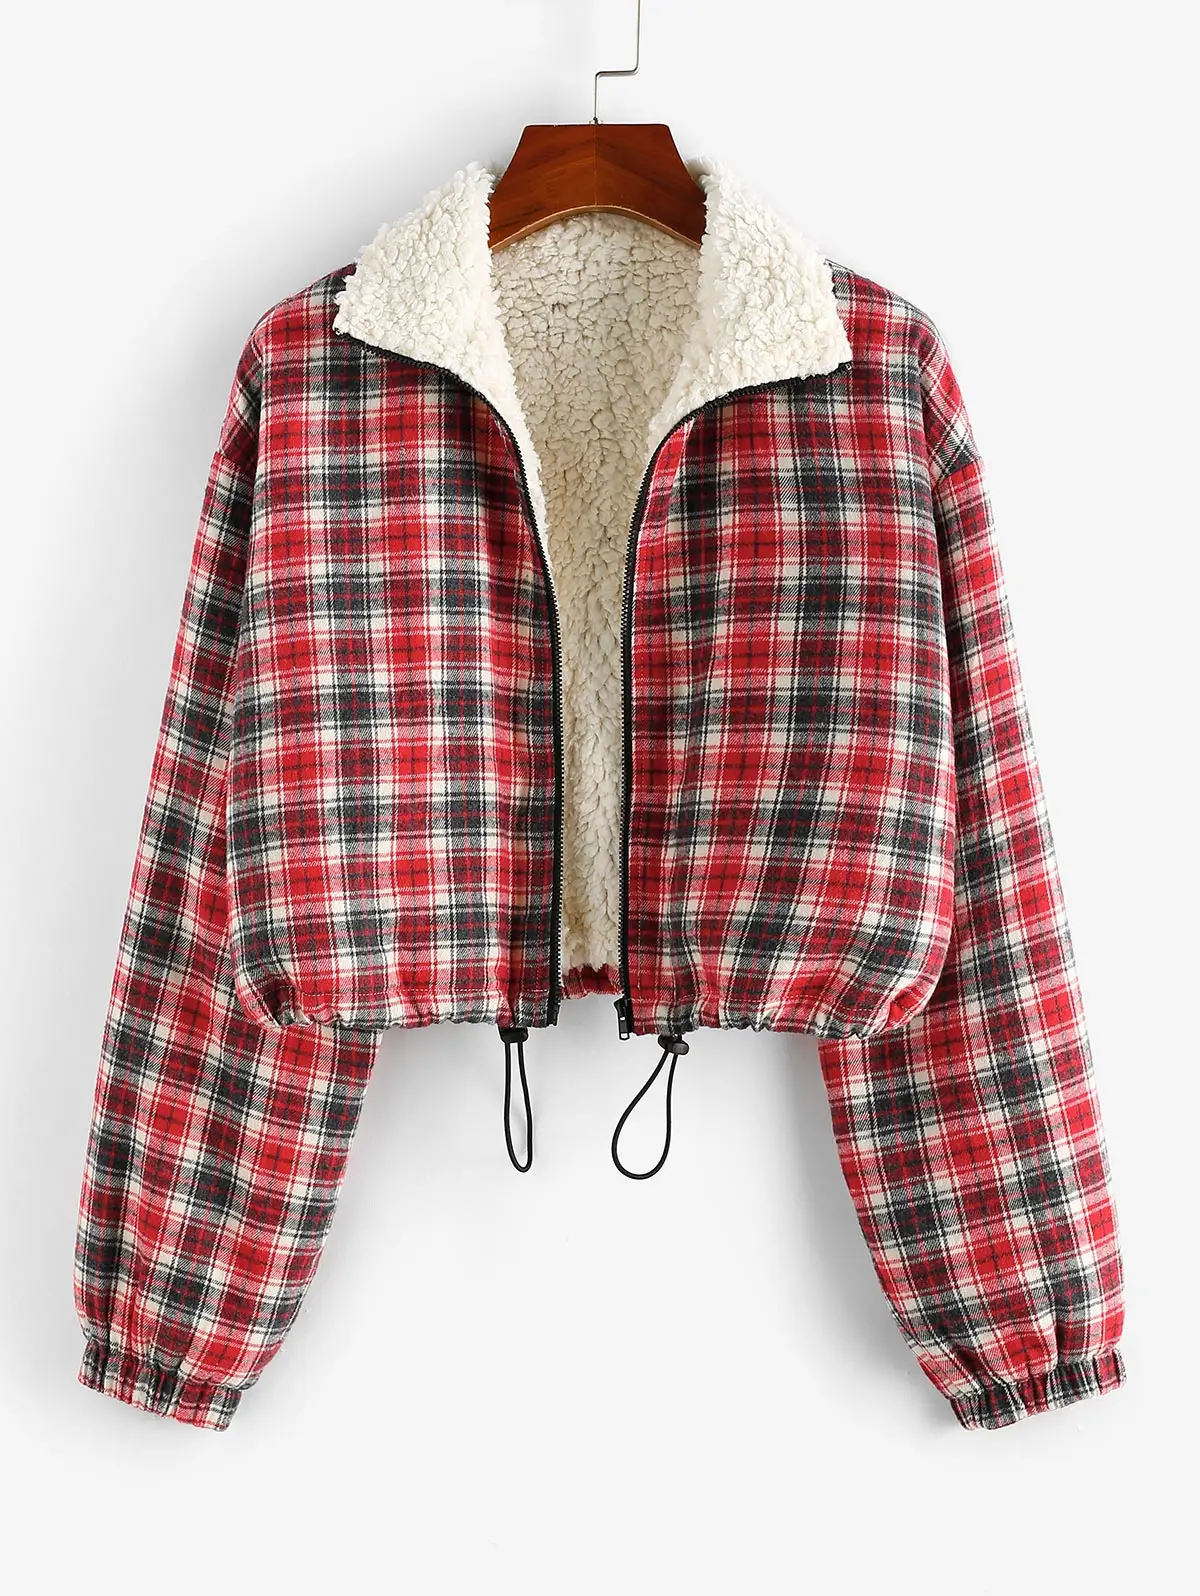 

ZAFUL Winter Coat Women Plaid Faux Shearling Lined Drawstring Zip Jacket Sherpa Fluffy Warm Turn Down Collar Outwear